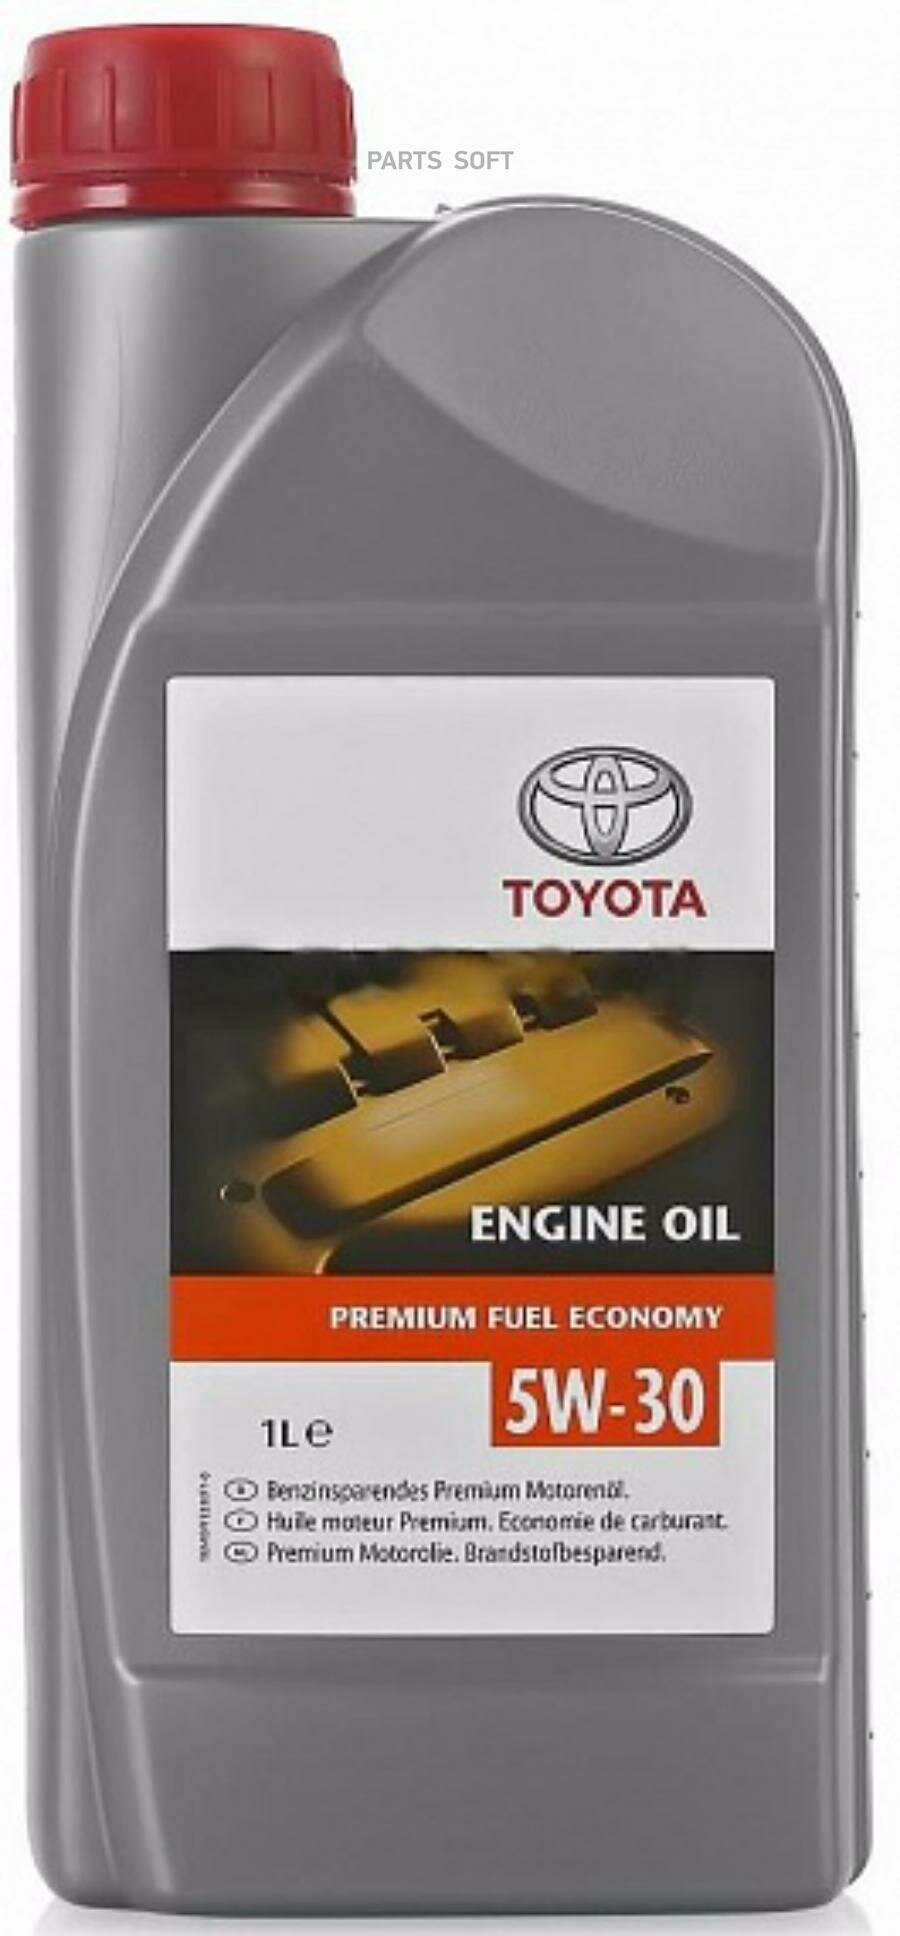 Моторное масло TOYOTA Premium Fuel Economy PFE 5W-30 синтетическое 1 л 08880-83388